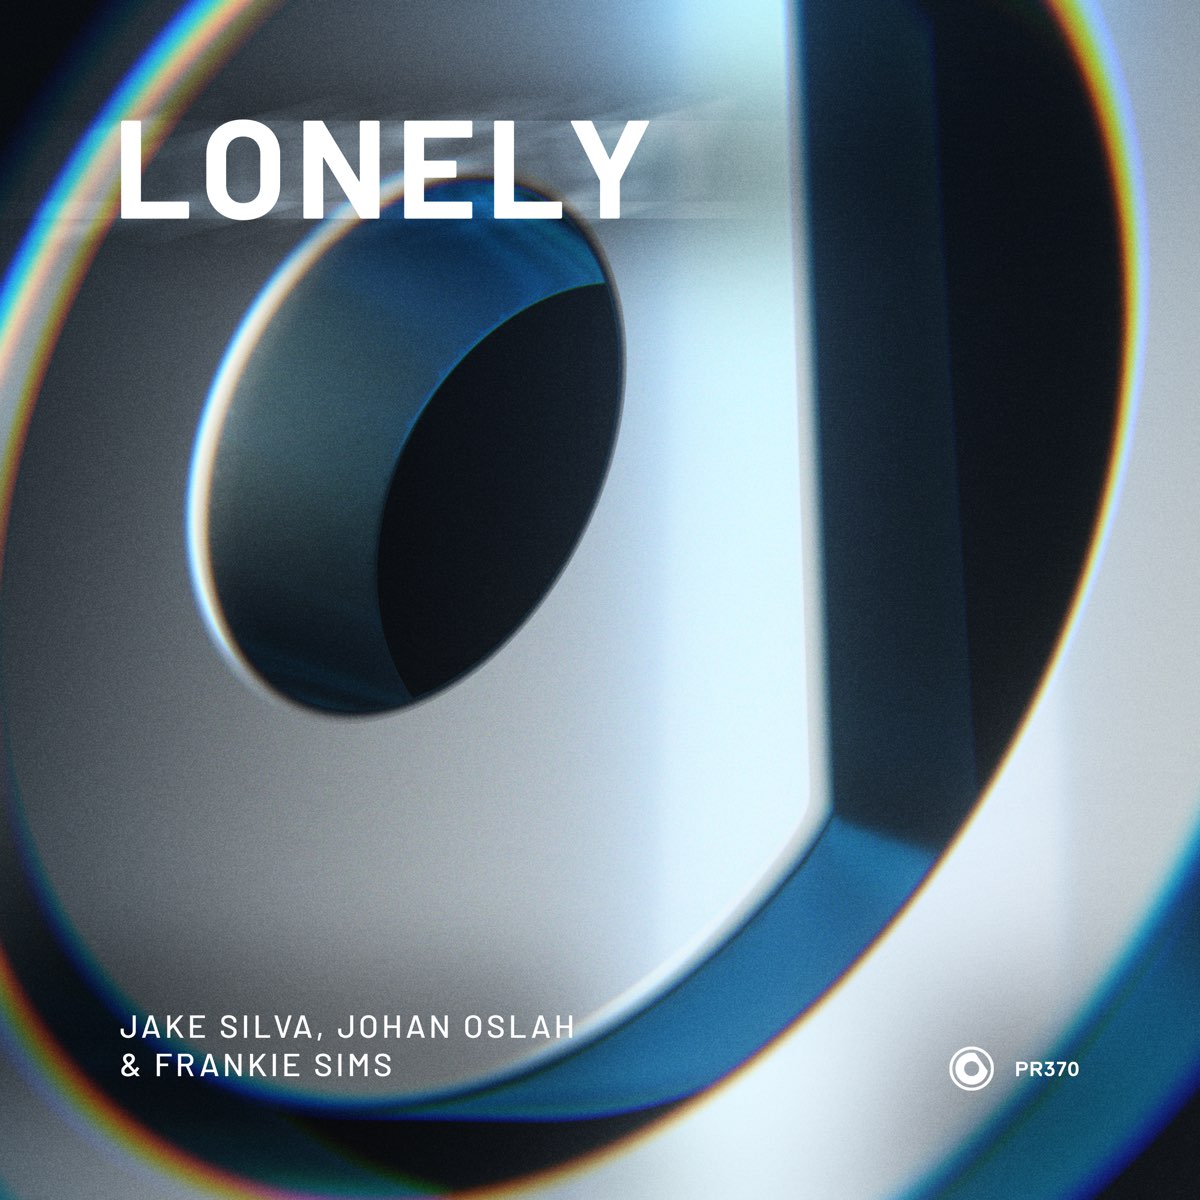 Jake Silva, Johan Oslah, & Frankie Sims — Lonely cover artwork